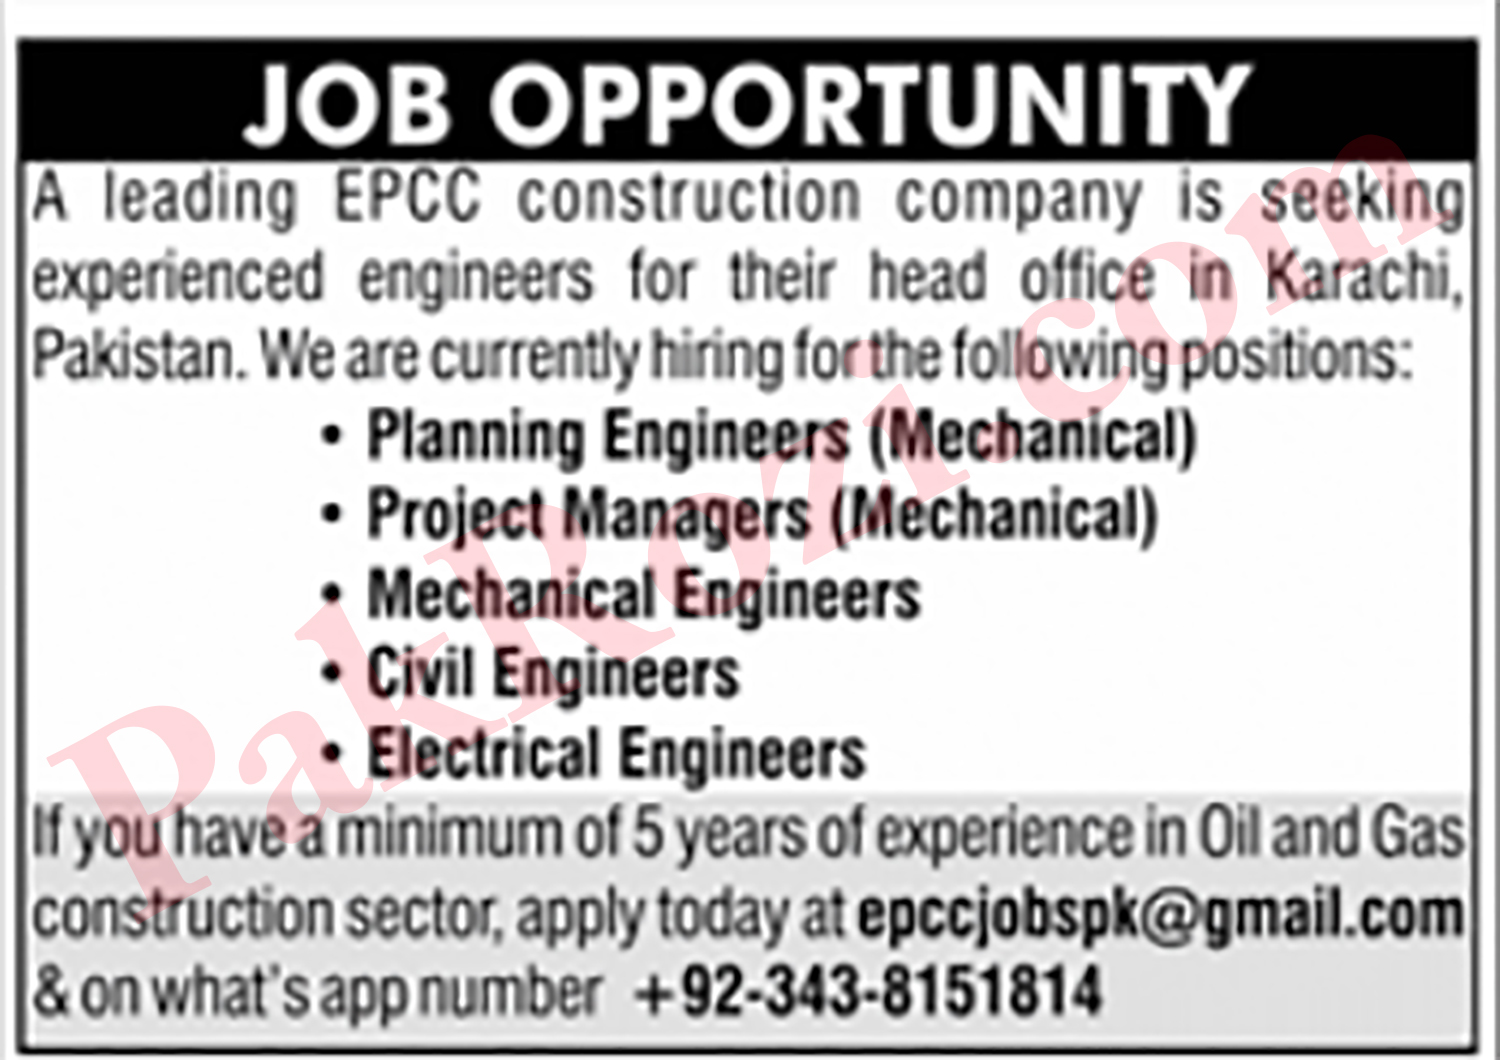 EPCC Construction Company is Seeking Engineers.